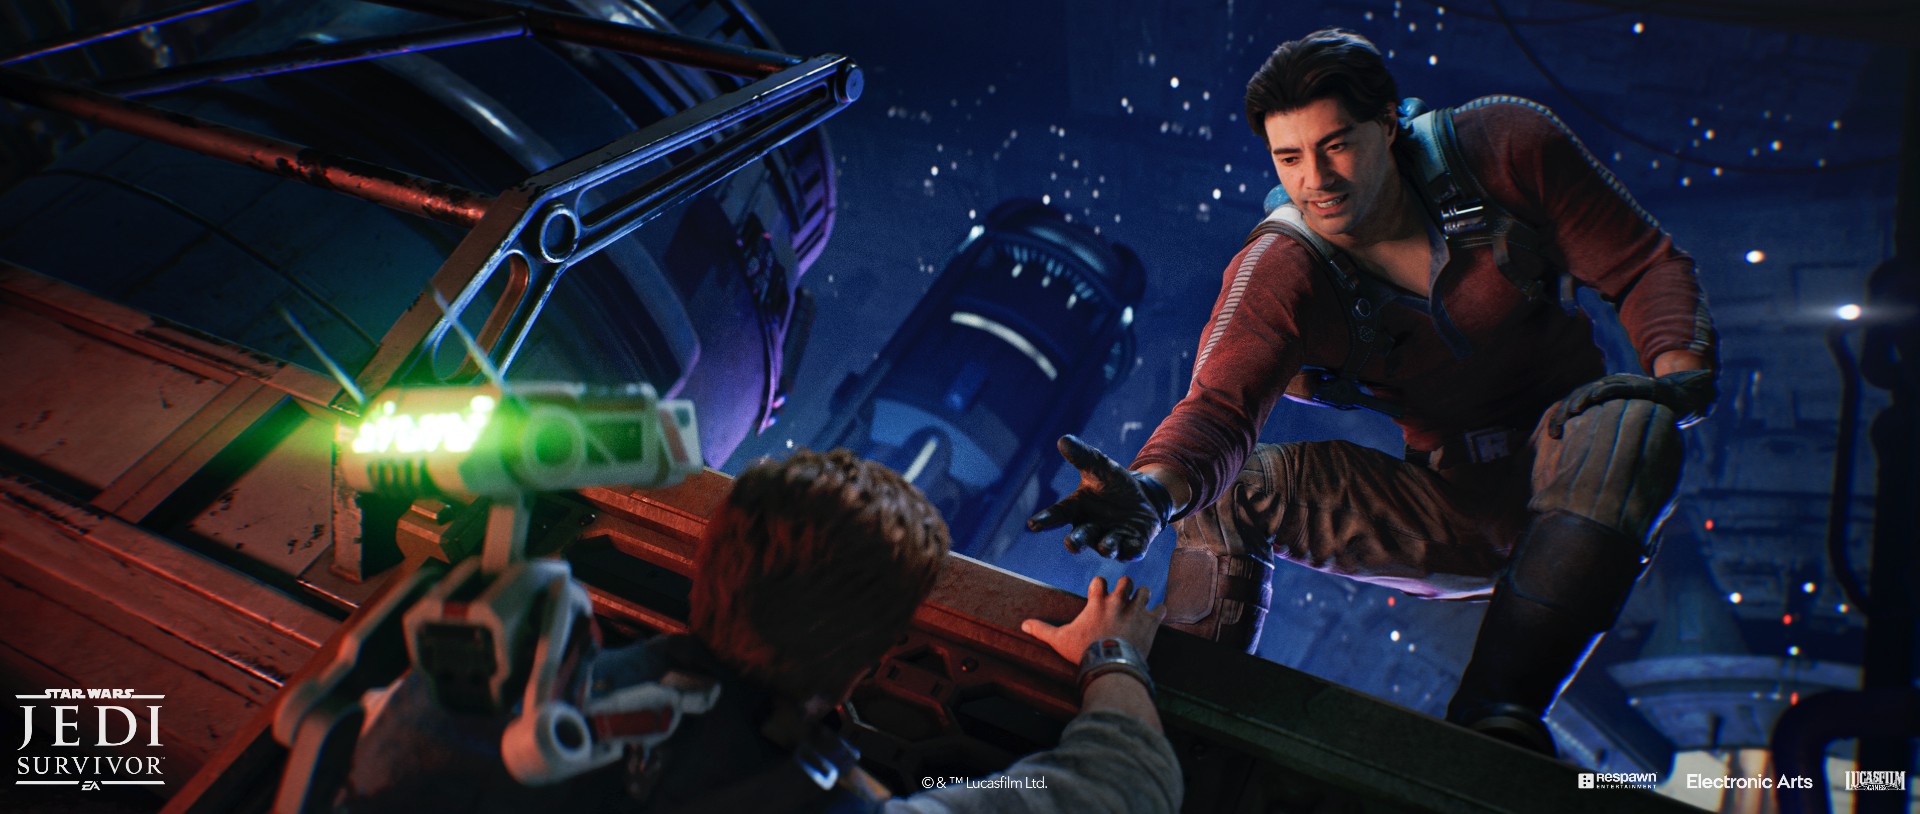 Star Wars Jedi: Survivor จะไม่มี PlayStation 4 กับ Xbox One เพราะข้อจำกัดด้านฮาร์ดแวร์